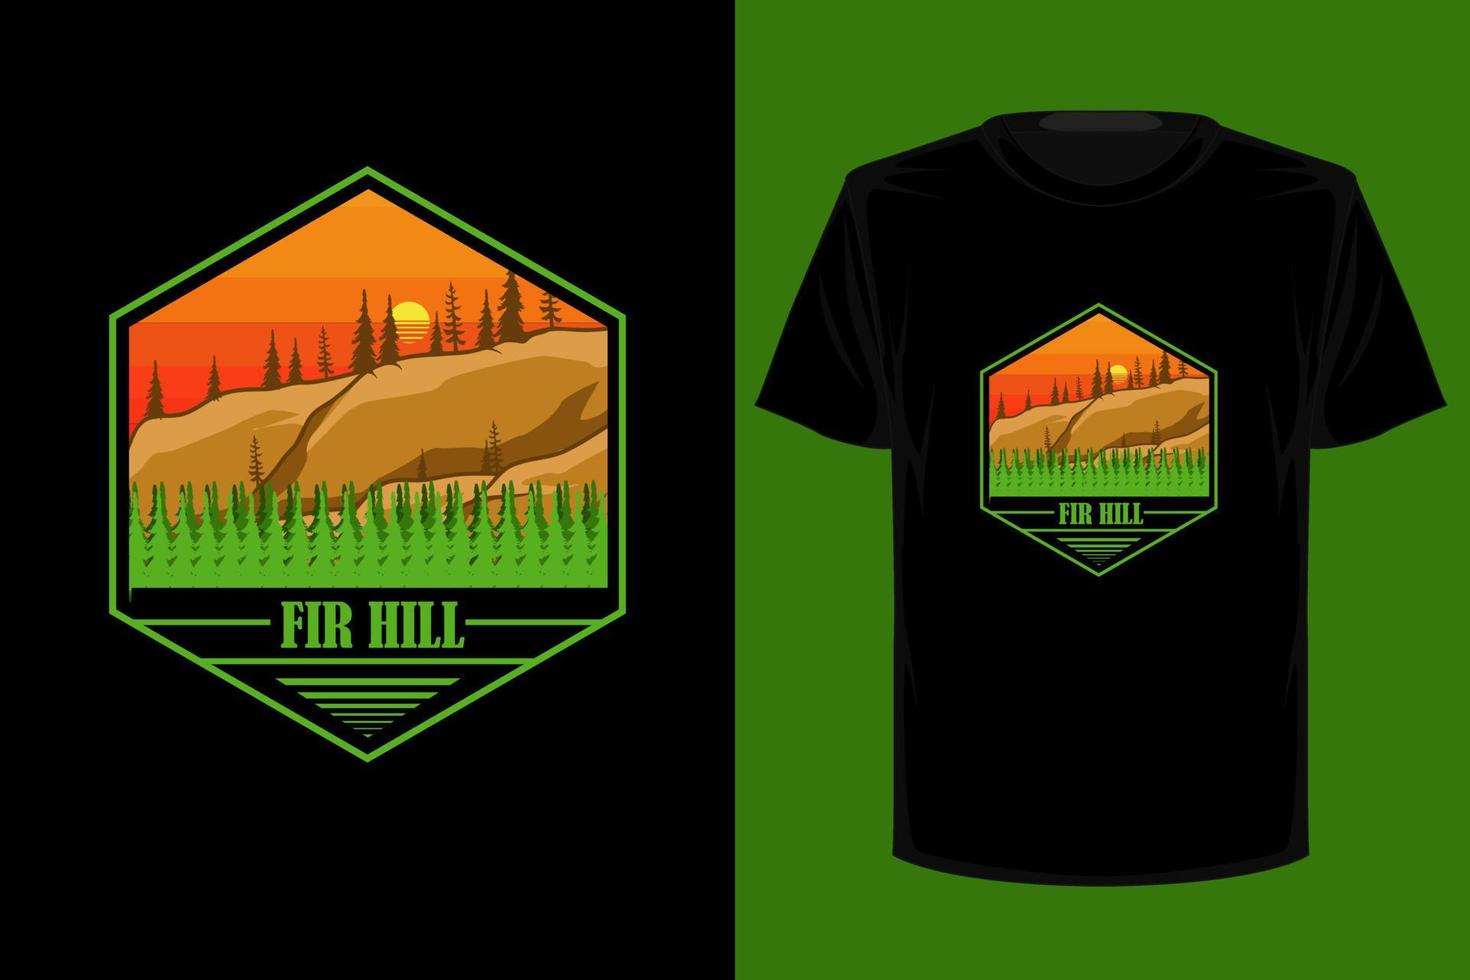 gran hill retro vintage t-shirt design vektor